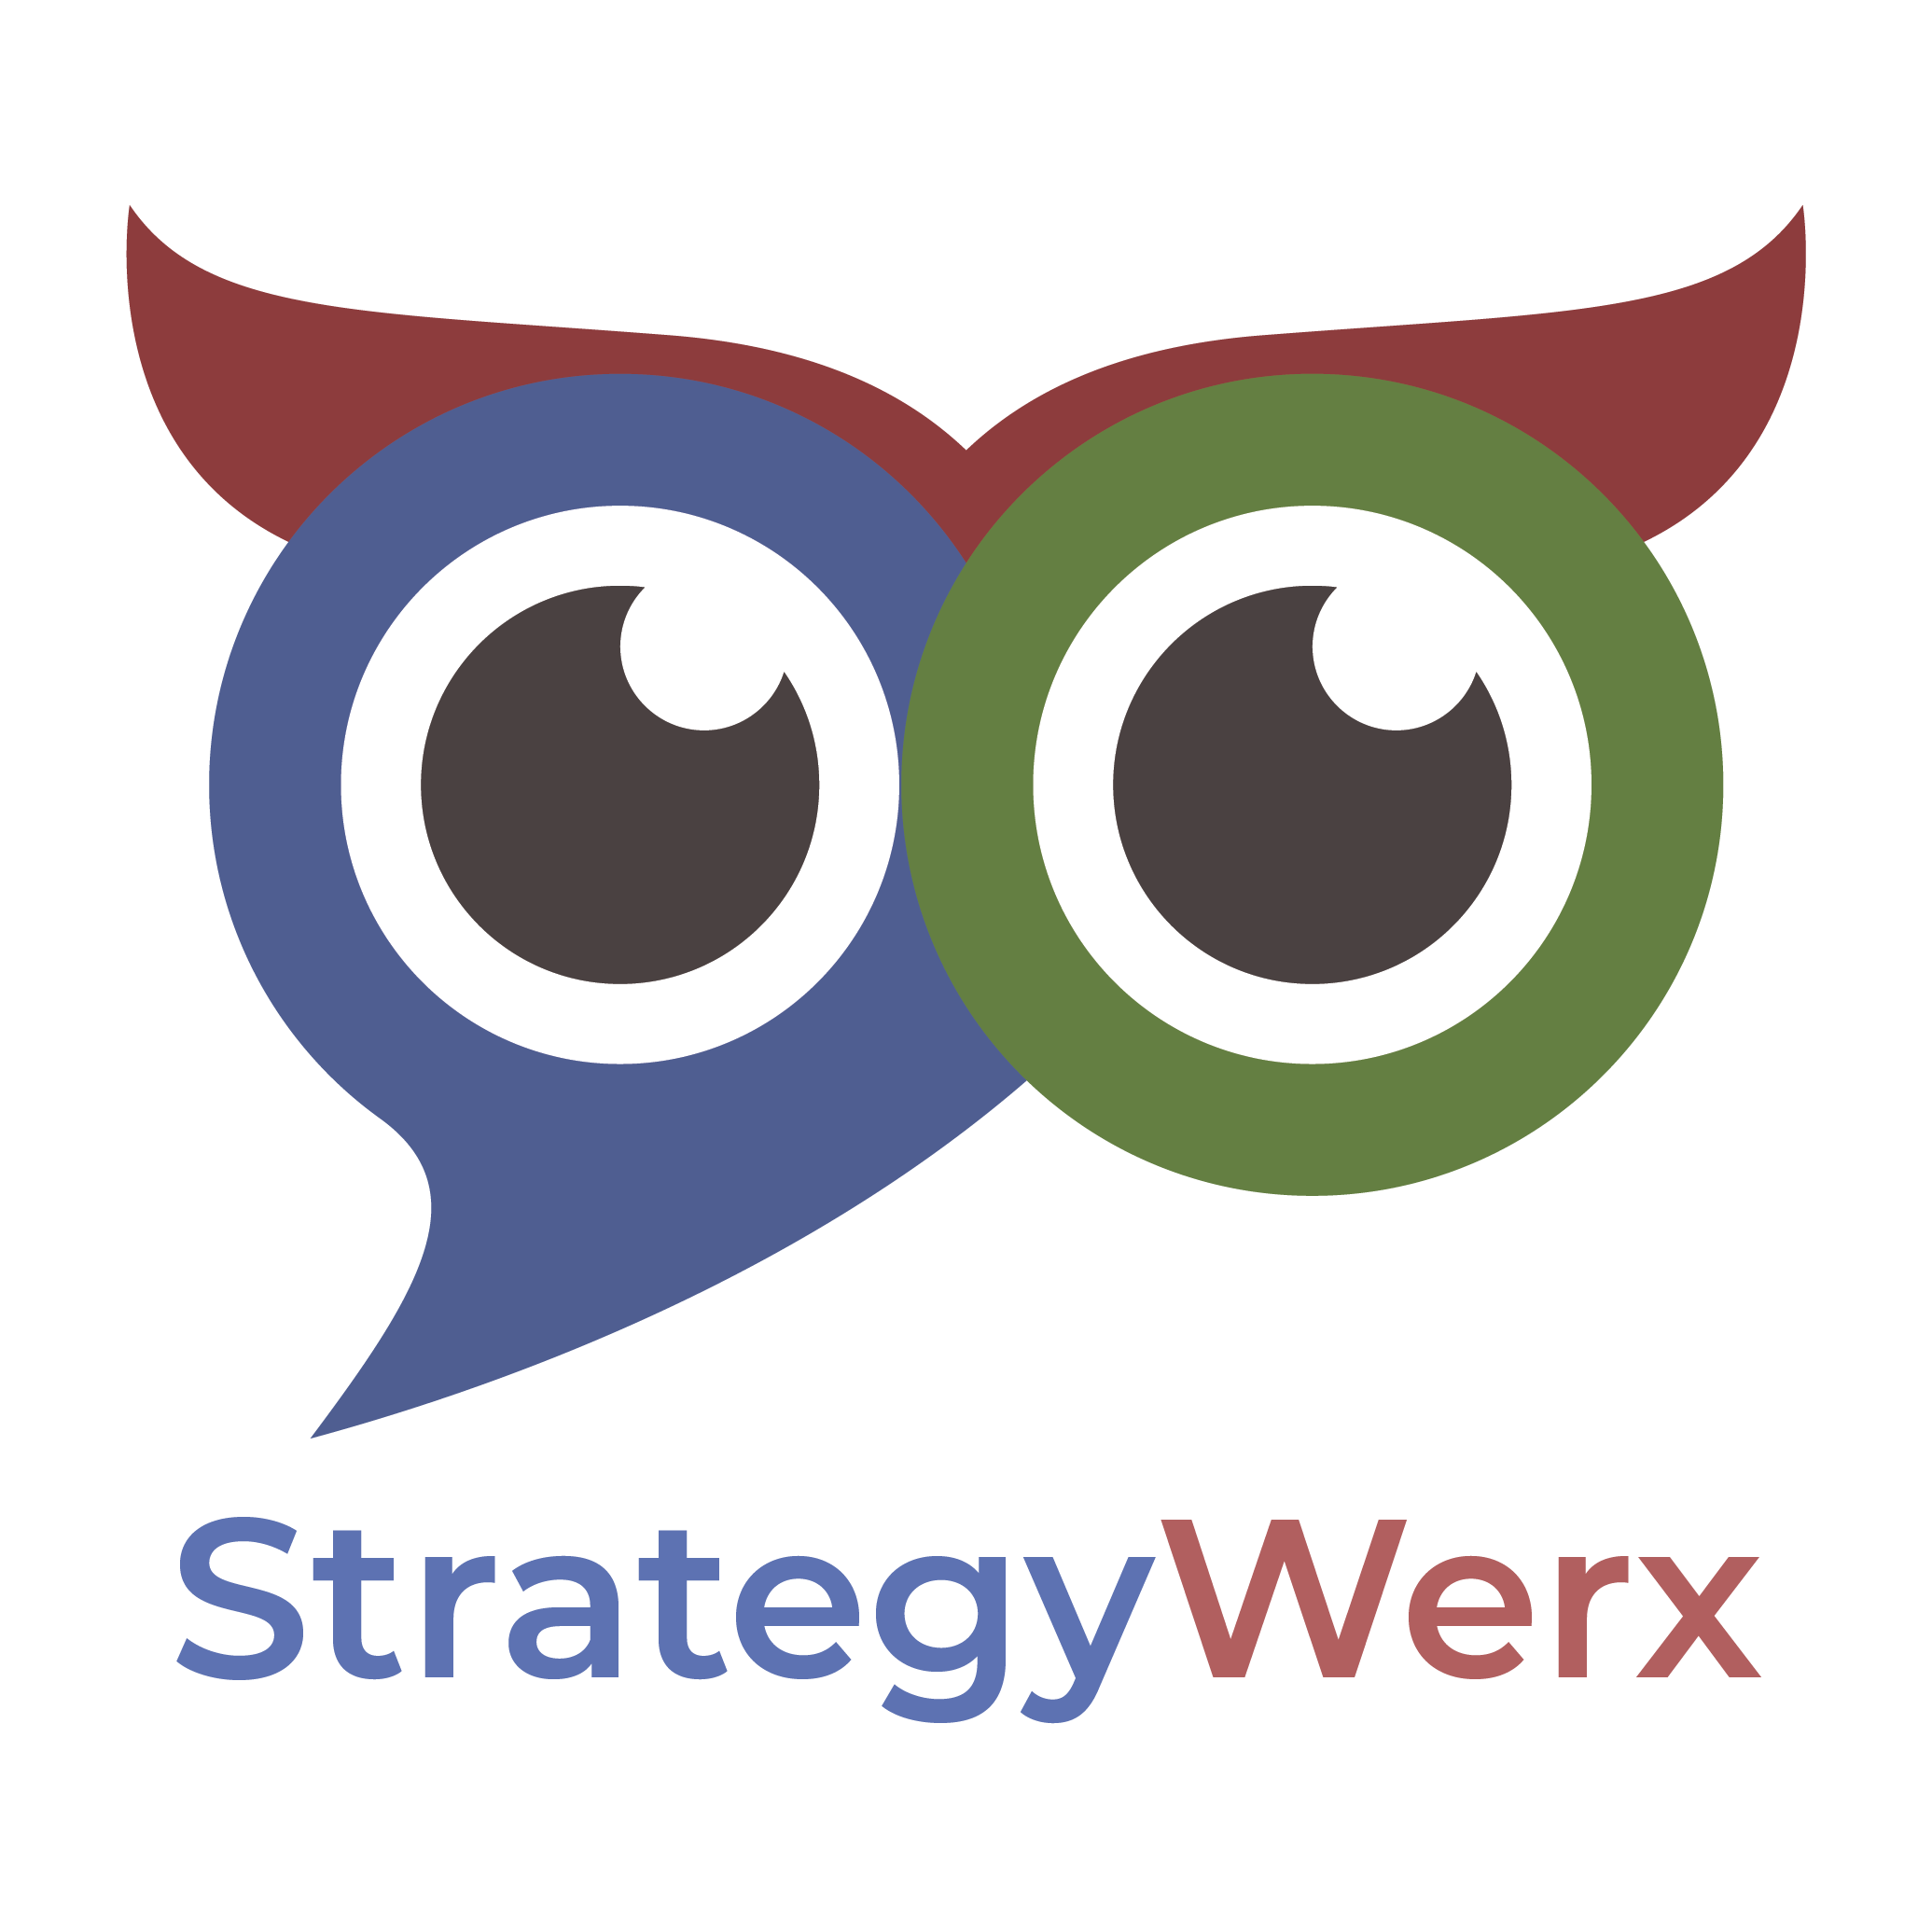 StrategyWerx Logo